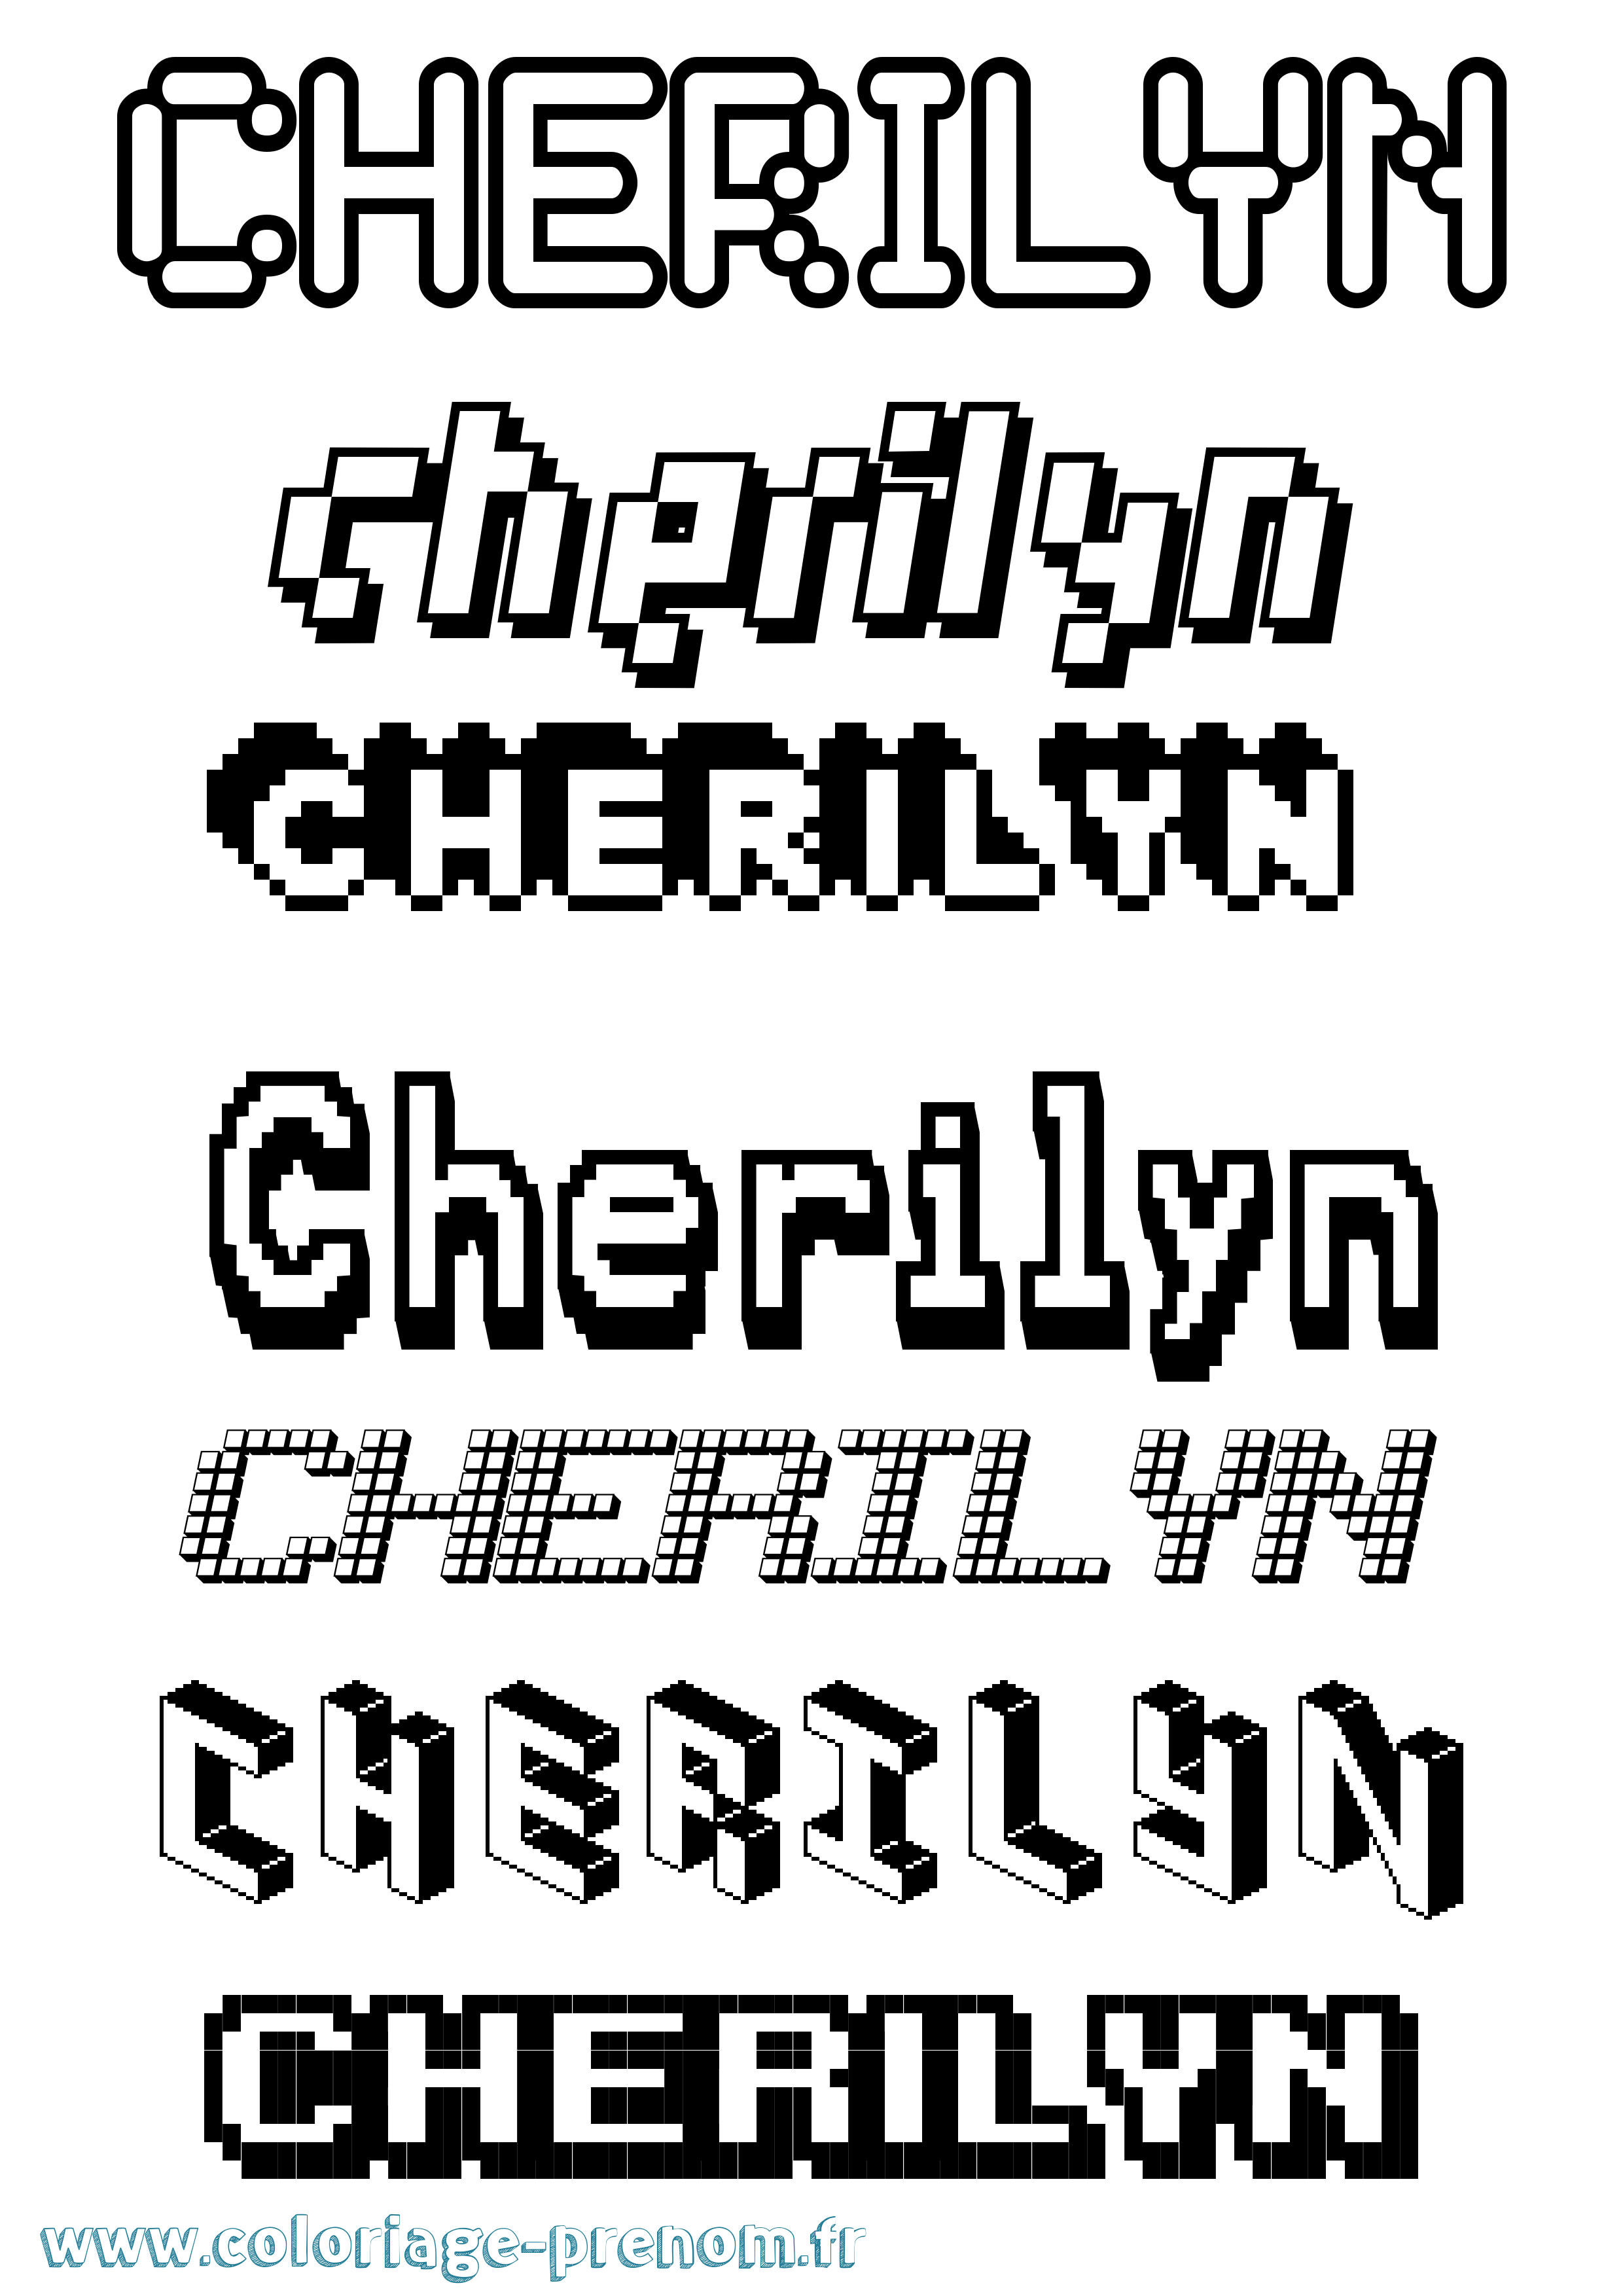 Coloriage prénom Cherilyn Pixel